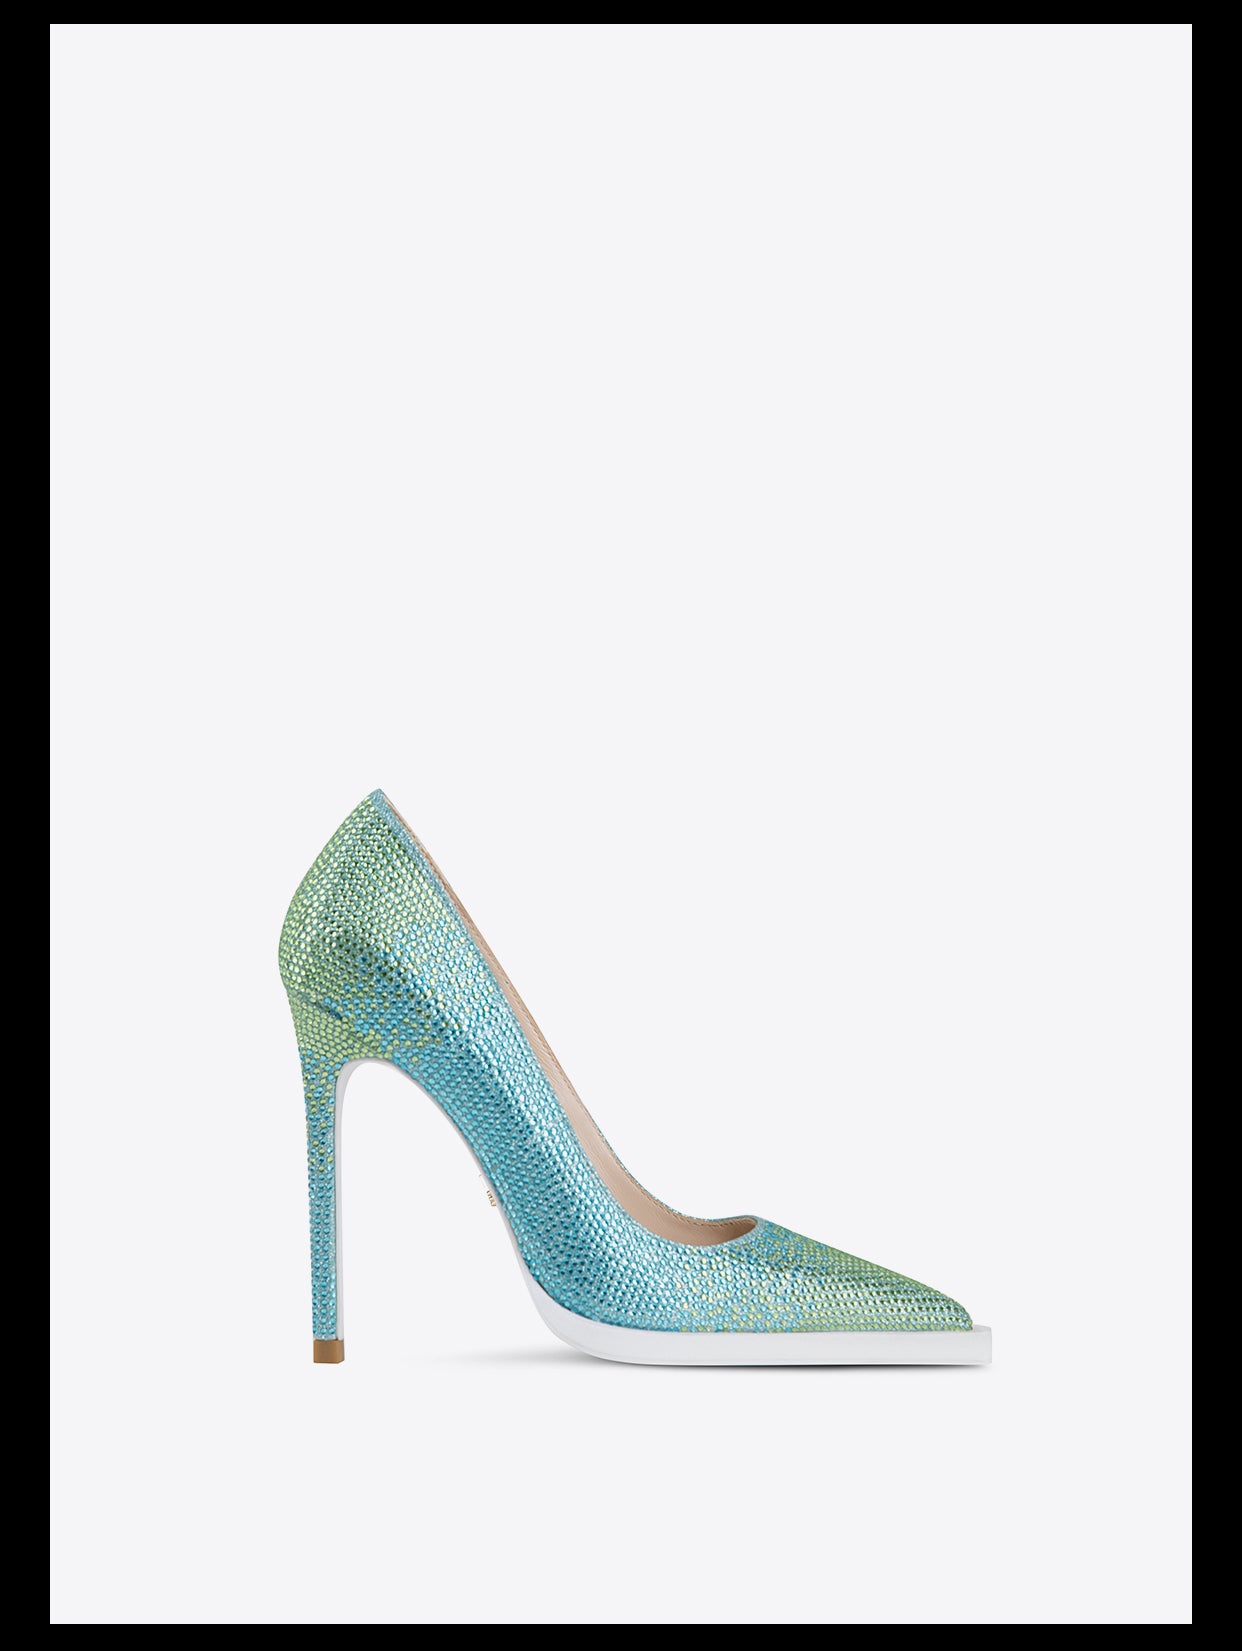 Fabfei gradient ombre blue rhinestone stiletto high heels platform elegant pumps - Reode